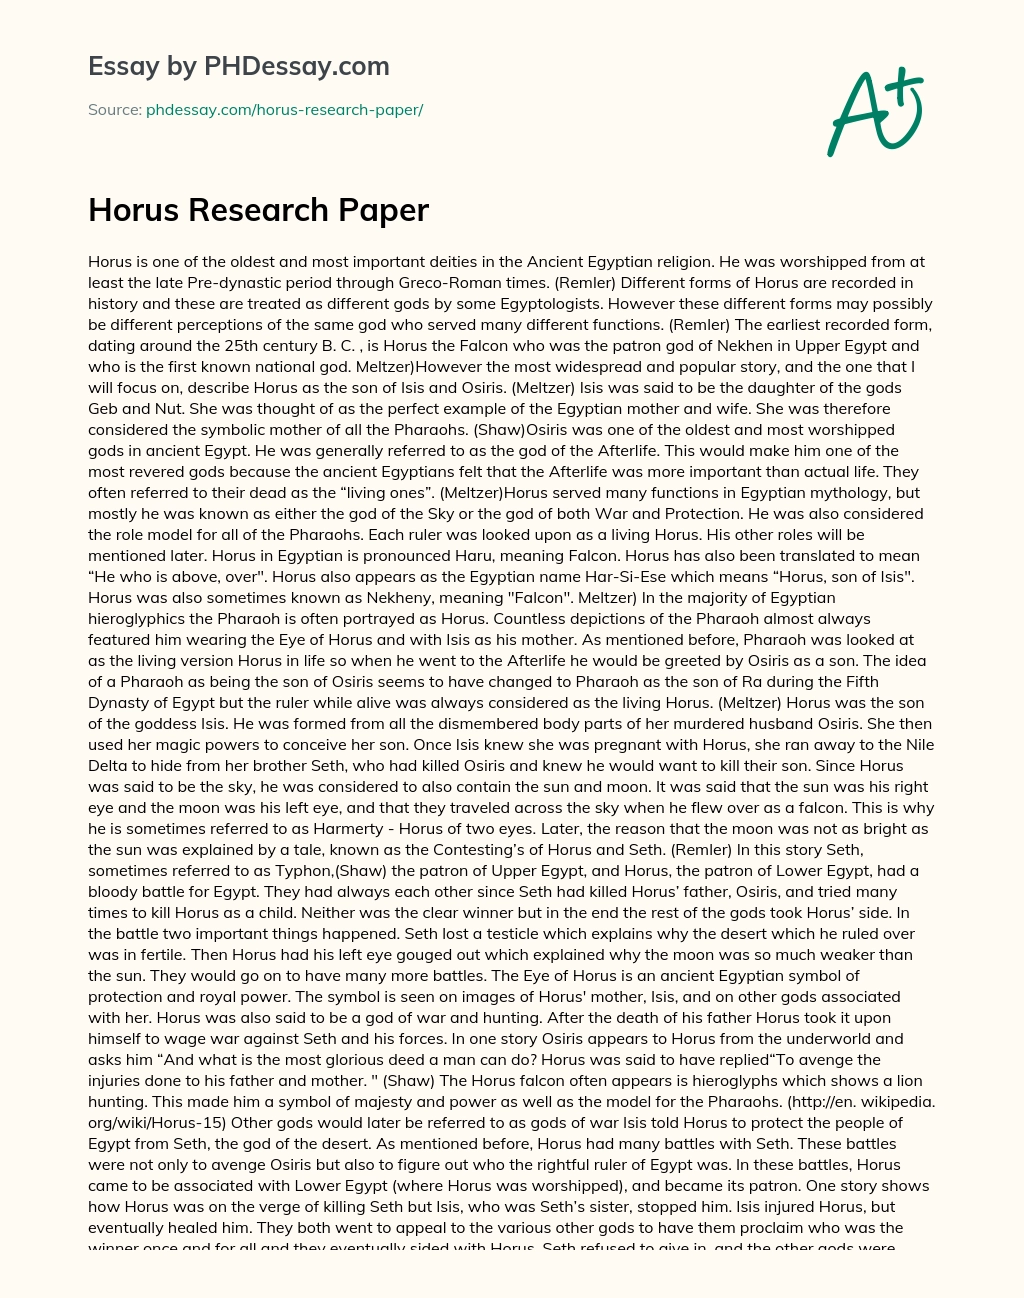 Horus Research Paper essay